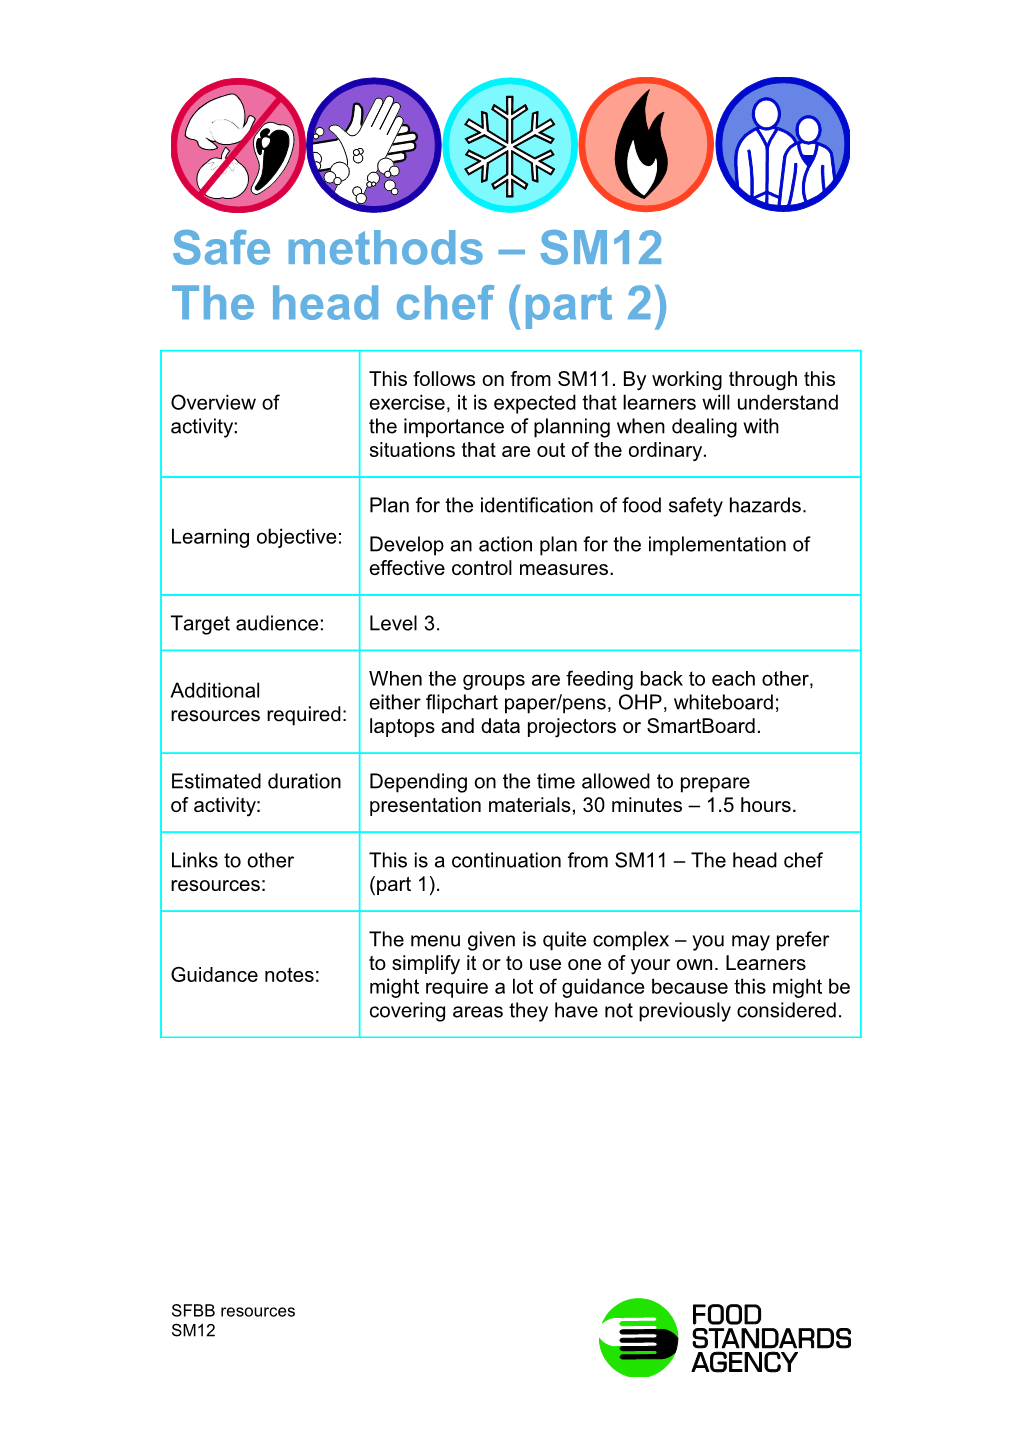 Safe Methods SM12 the Head Chef (Part 2)